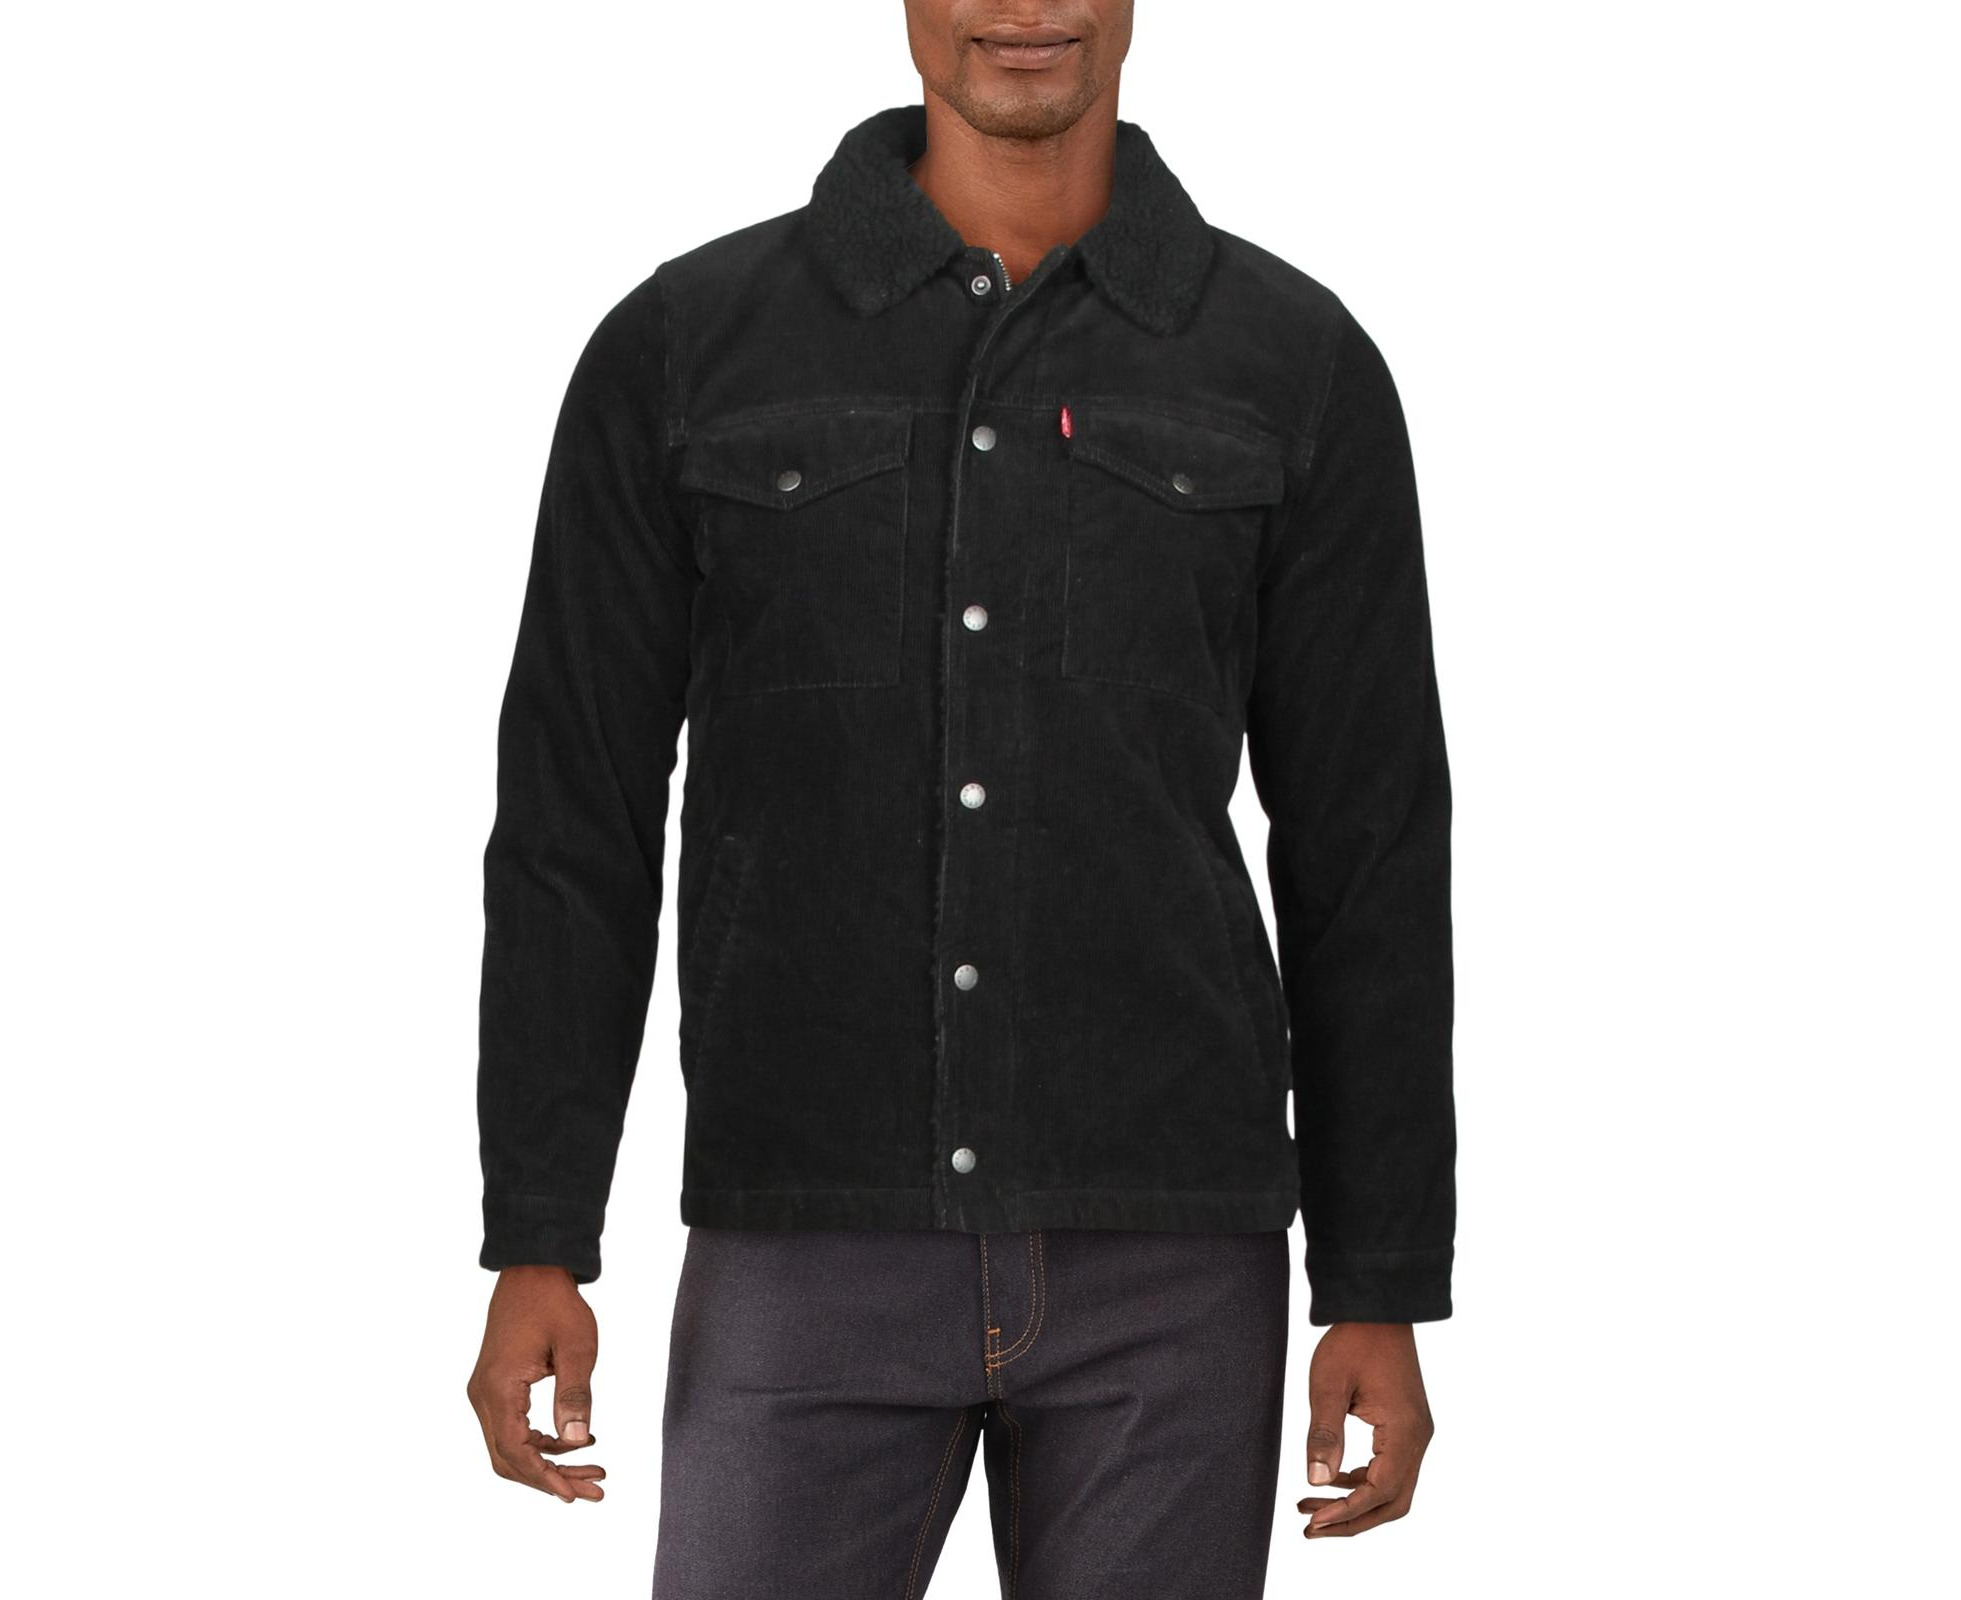 Levi Strauss & Co. Men's Coats & Jackets - Trucker Jacket - Black ...